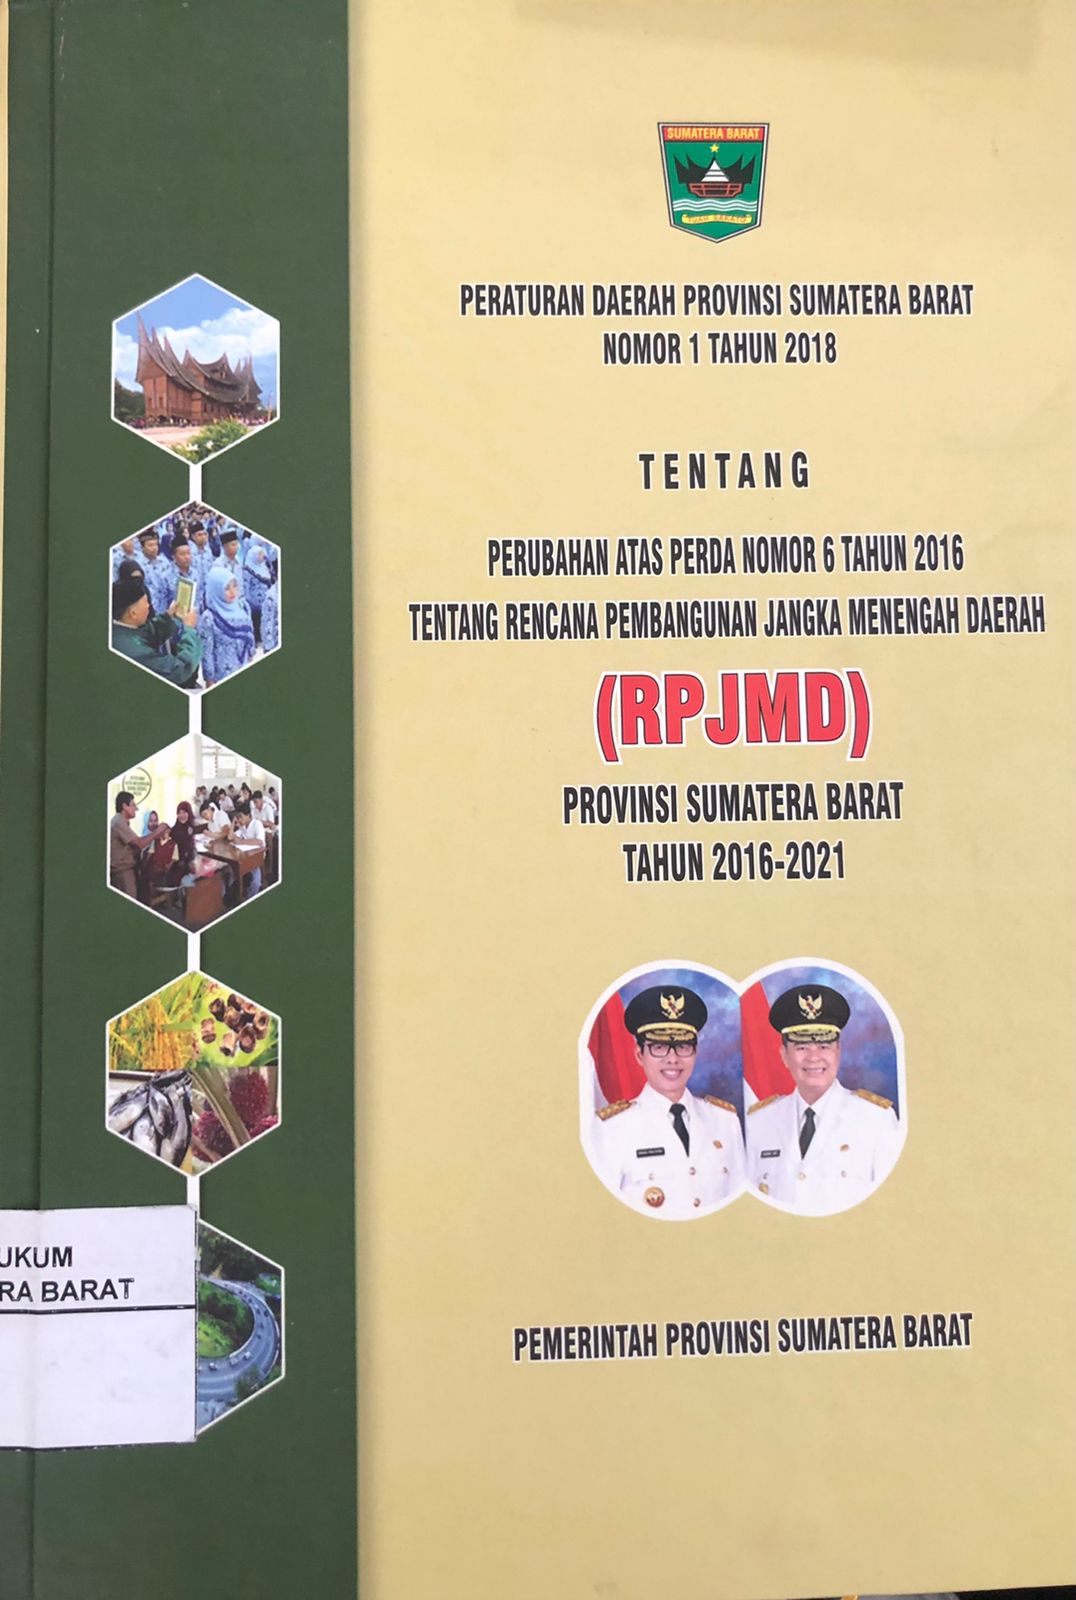 Peraturan Daerah Provinsi Sumatera Barat Nomor 1 Tahun 2018 Tentang perubahan Atas Perda Nomor 6 tahnu 2016 Tentang Rencana Pembangunan Jangka Menengah Daerah 2016-2021